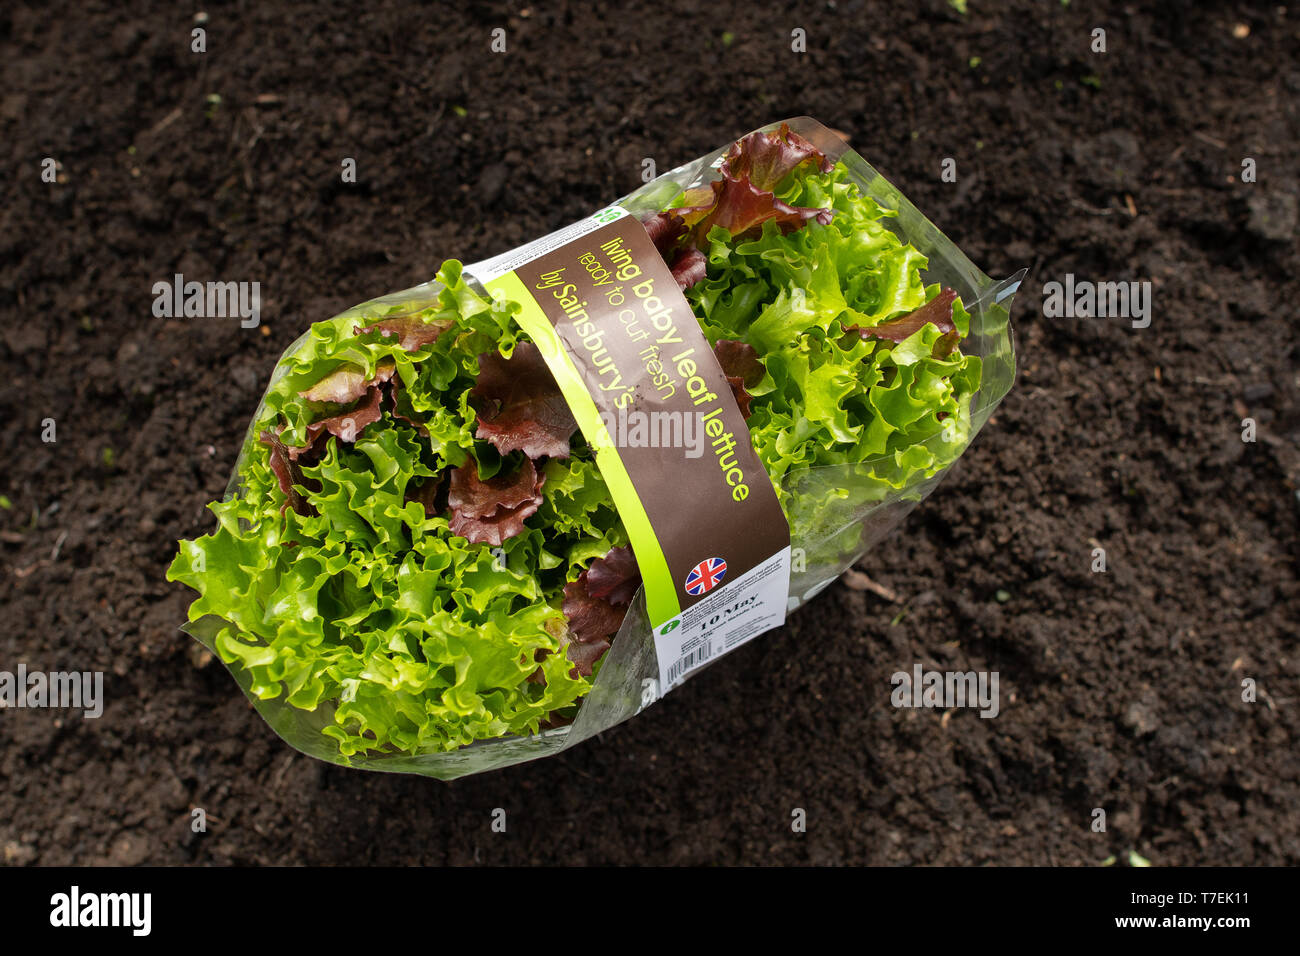 planting living baby lettuce salad into garden - see also images T7EK13 and T7EK14 Stock Photo